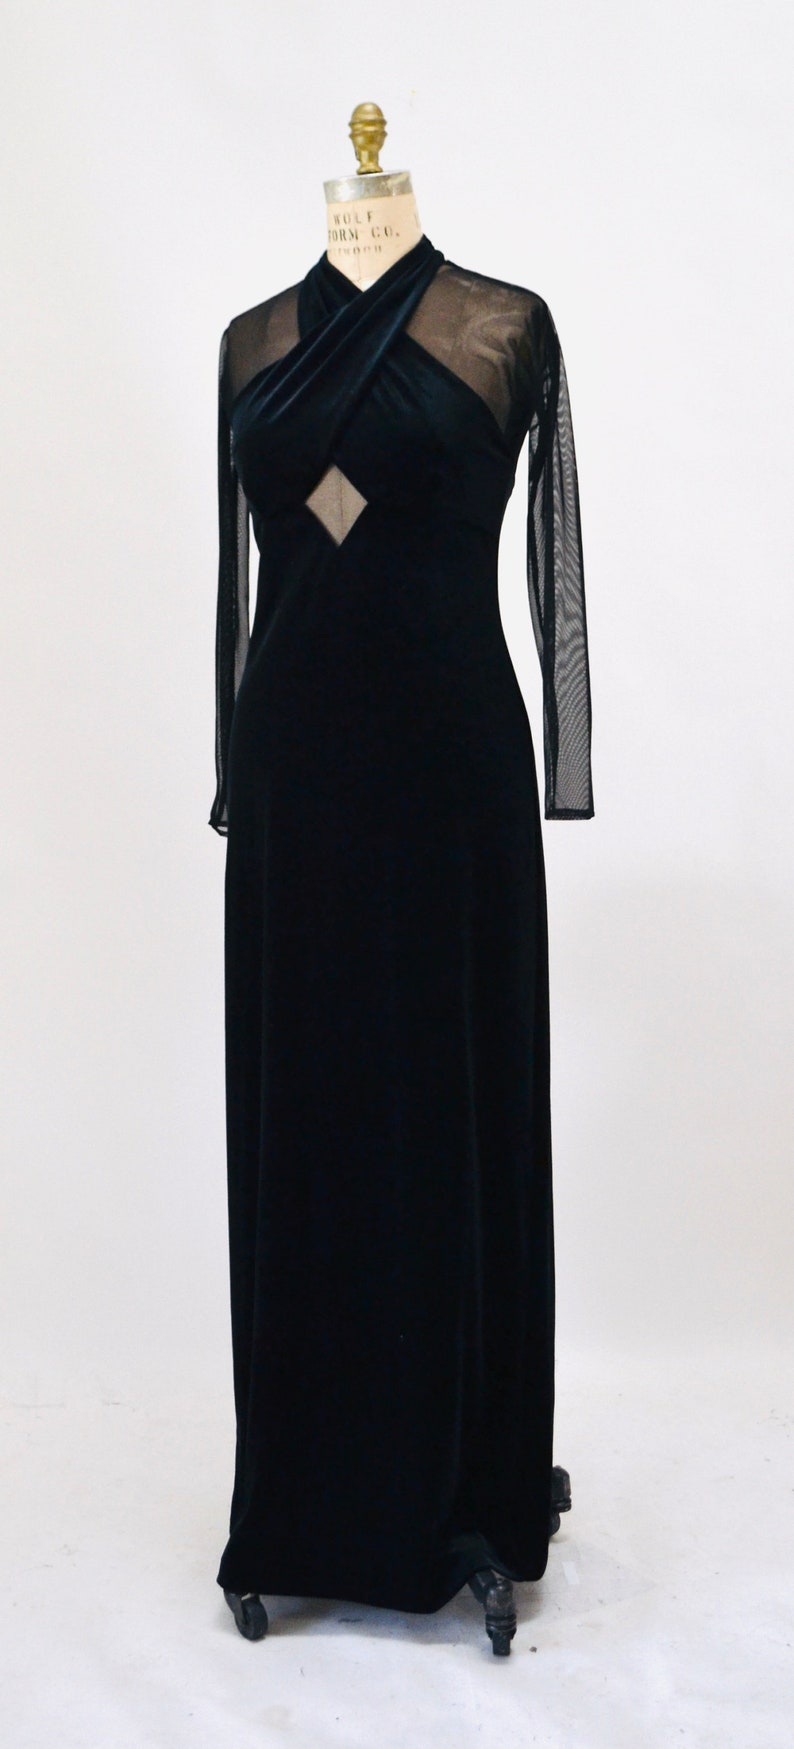 90s Vintage Black Velvet Prom Dress Illusion Dress Medium// Black Body Con 90s Prom Dress Bondage Dress Medium Sheer Sleeve long Black Dress image 2